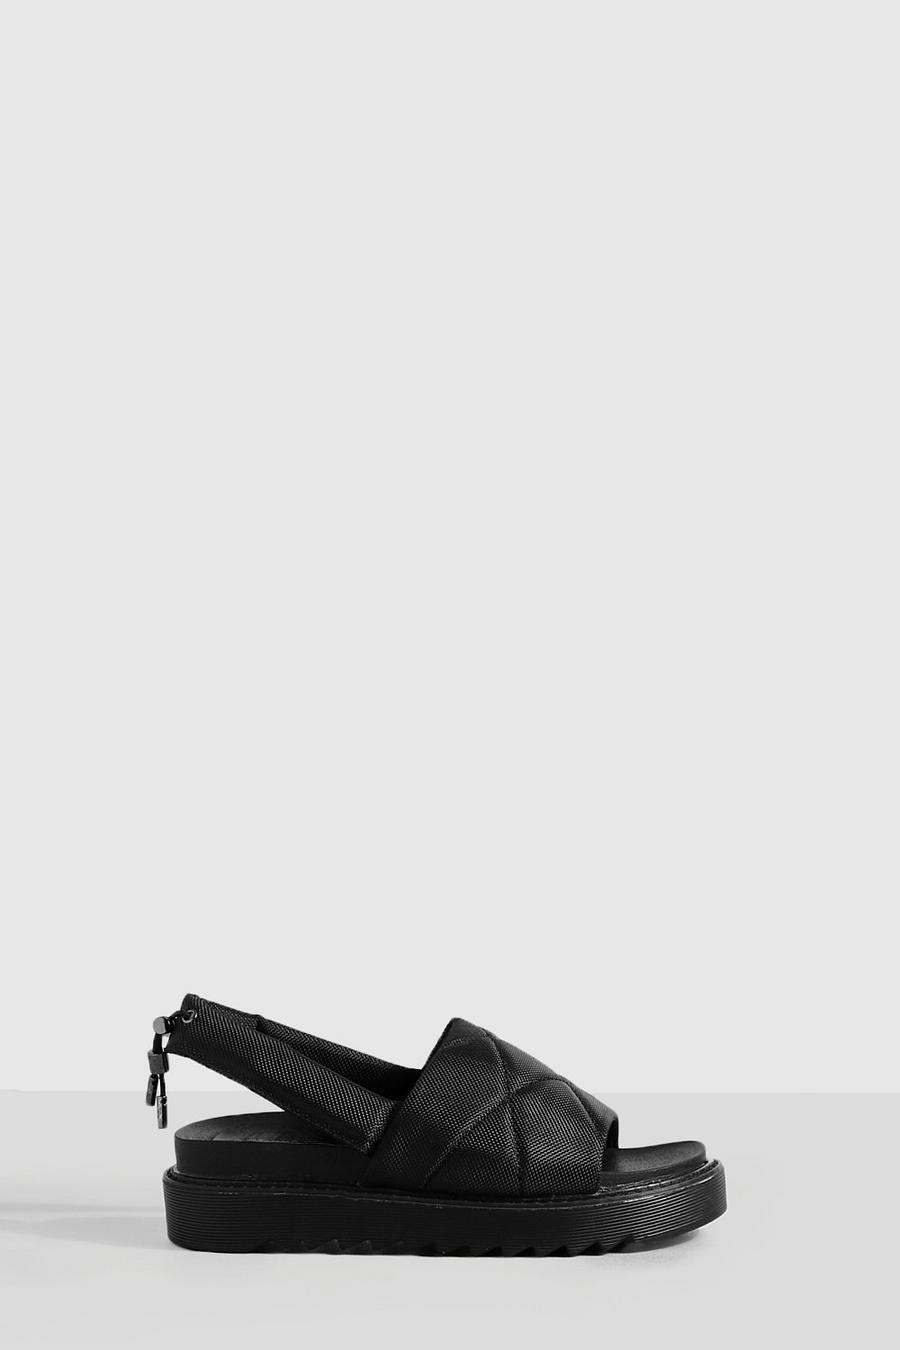 Sandali Flatform slingback trapuntati sul retro, Black nero